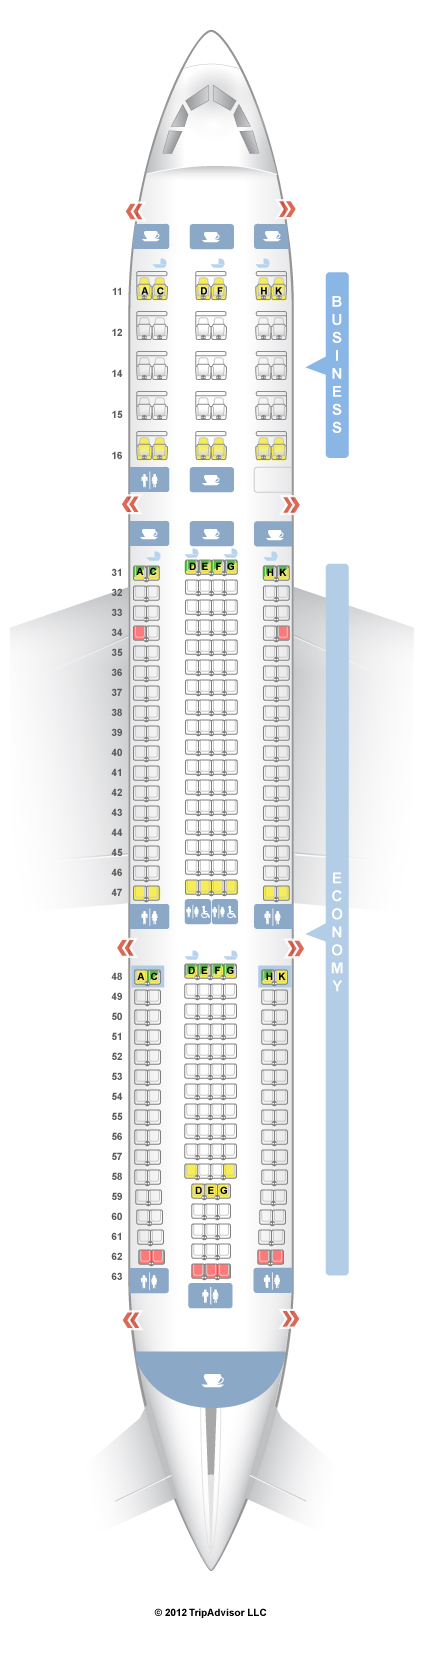 Air Canada Flight 302 Seating Chart